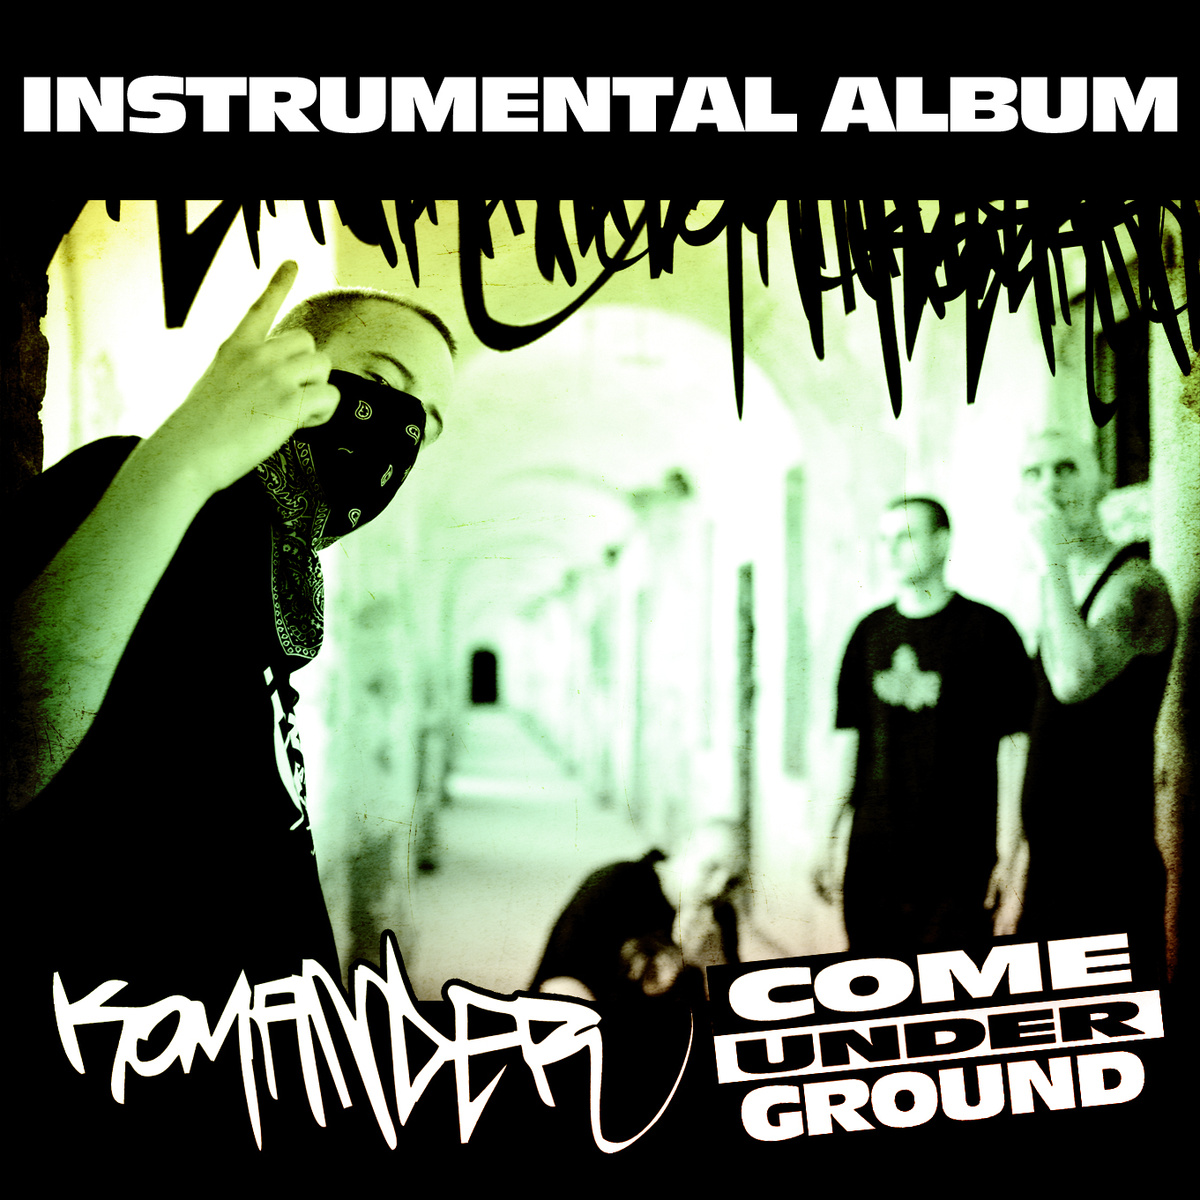 Komander – Come Underground